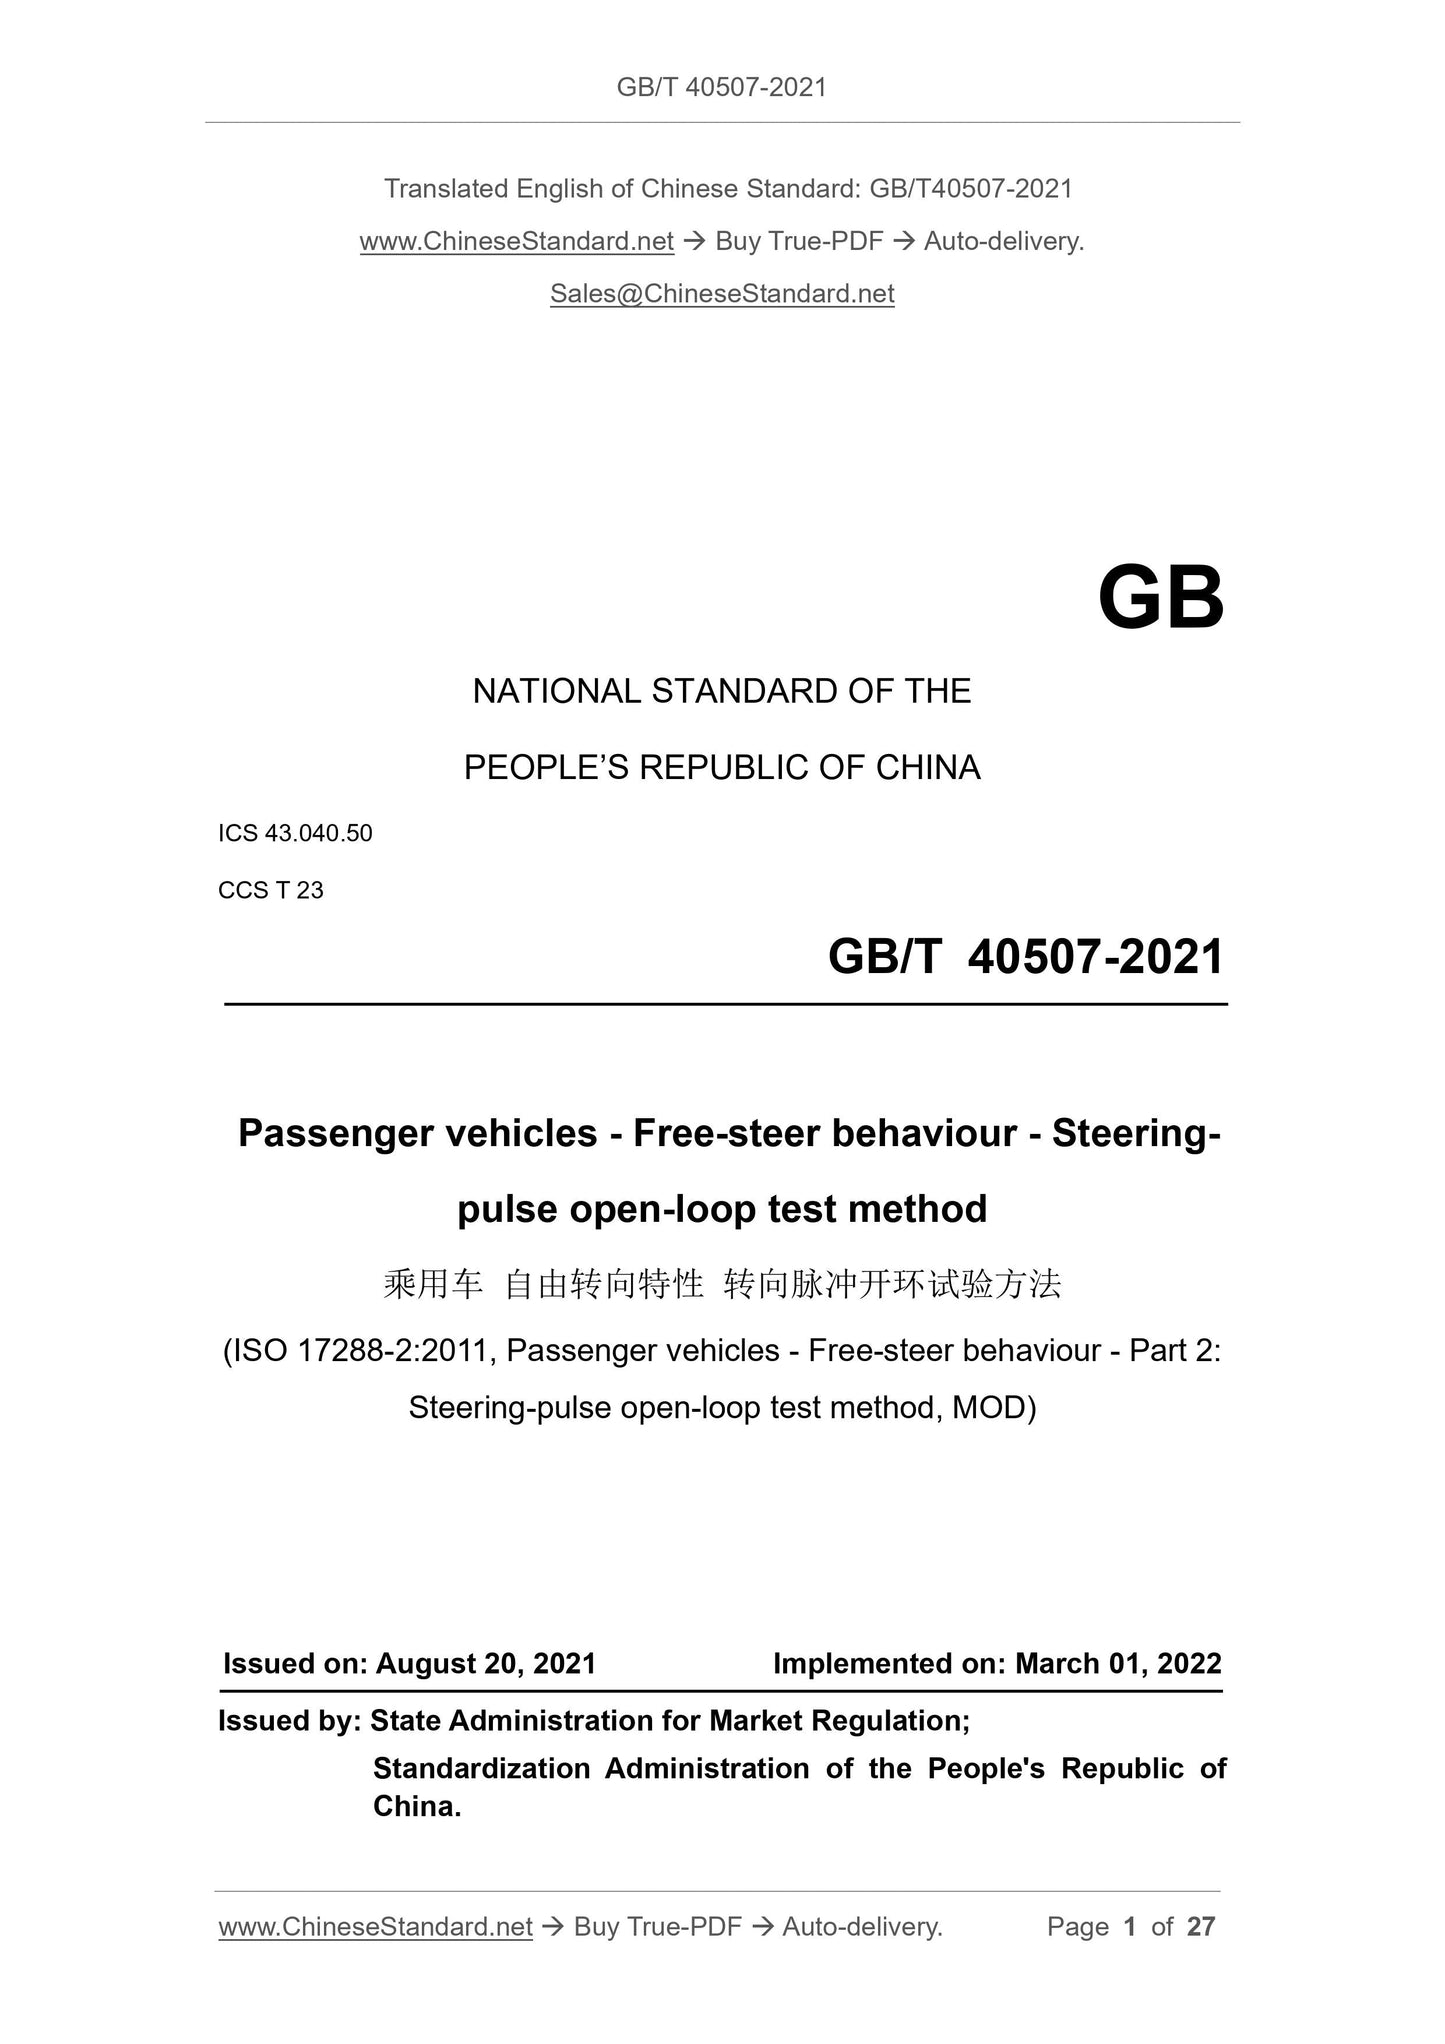 GBT40507-2021 Page 1